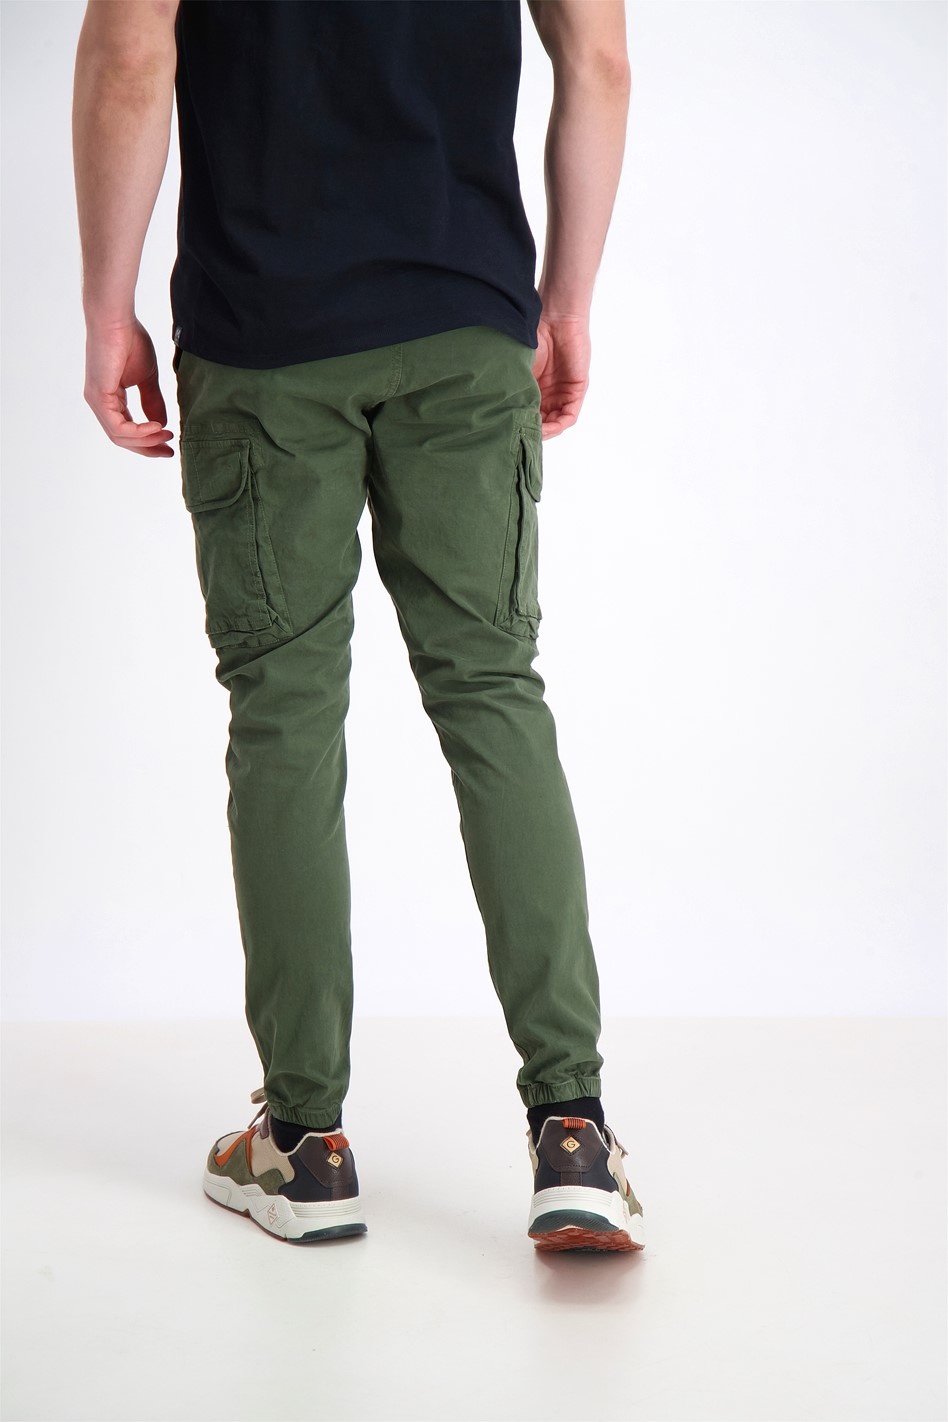 Cargo Pants For Men - Buy Latest Trendy Cargo Pants Online | Lindbergh